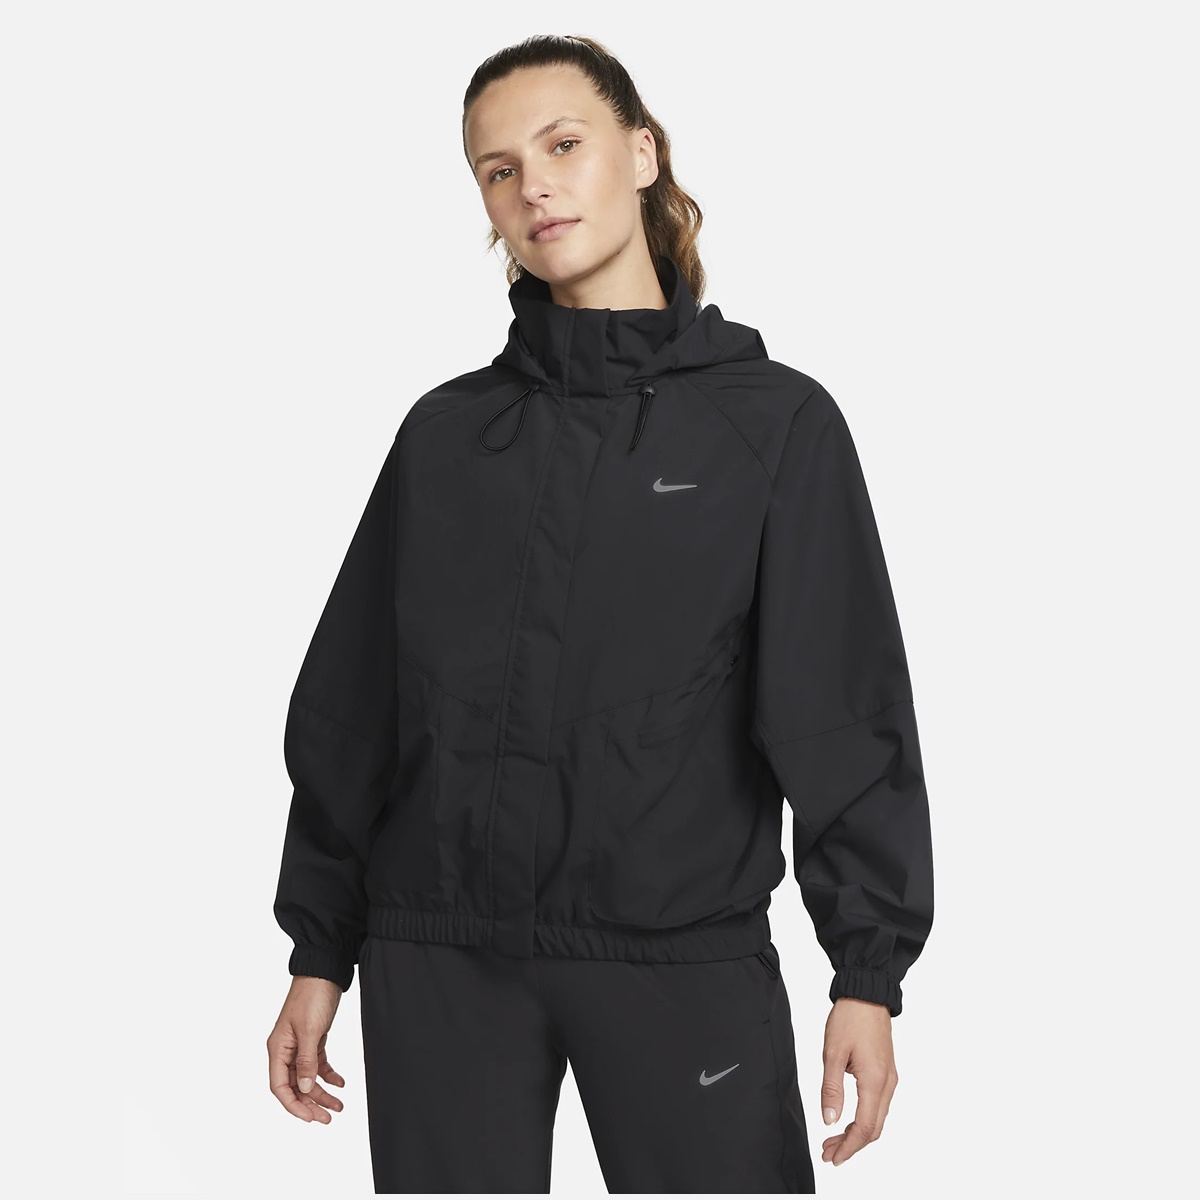 Nike Storm-FIT Swift Women's Running Jacket - Black